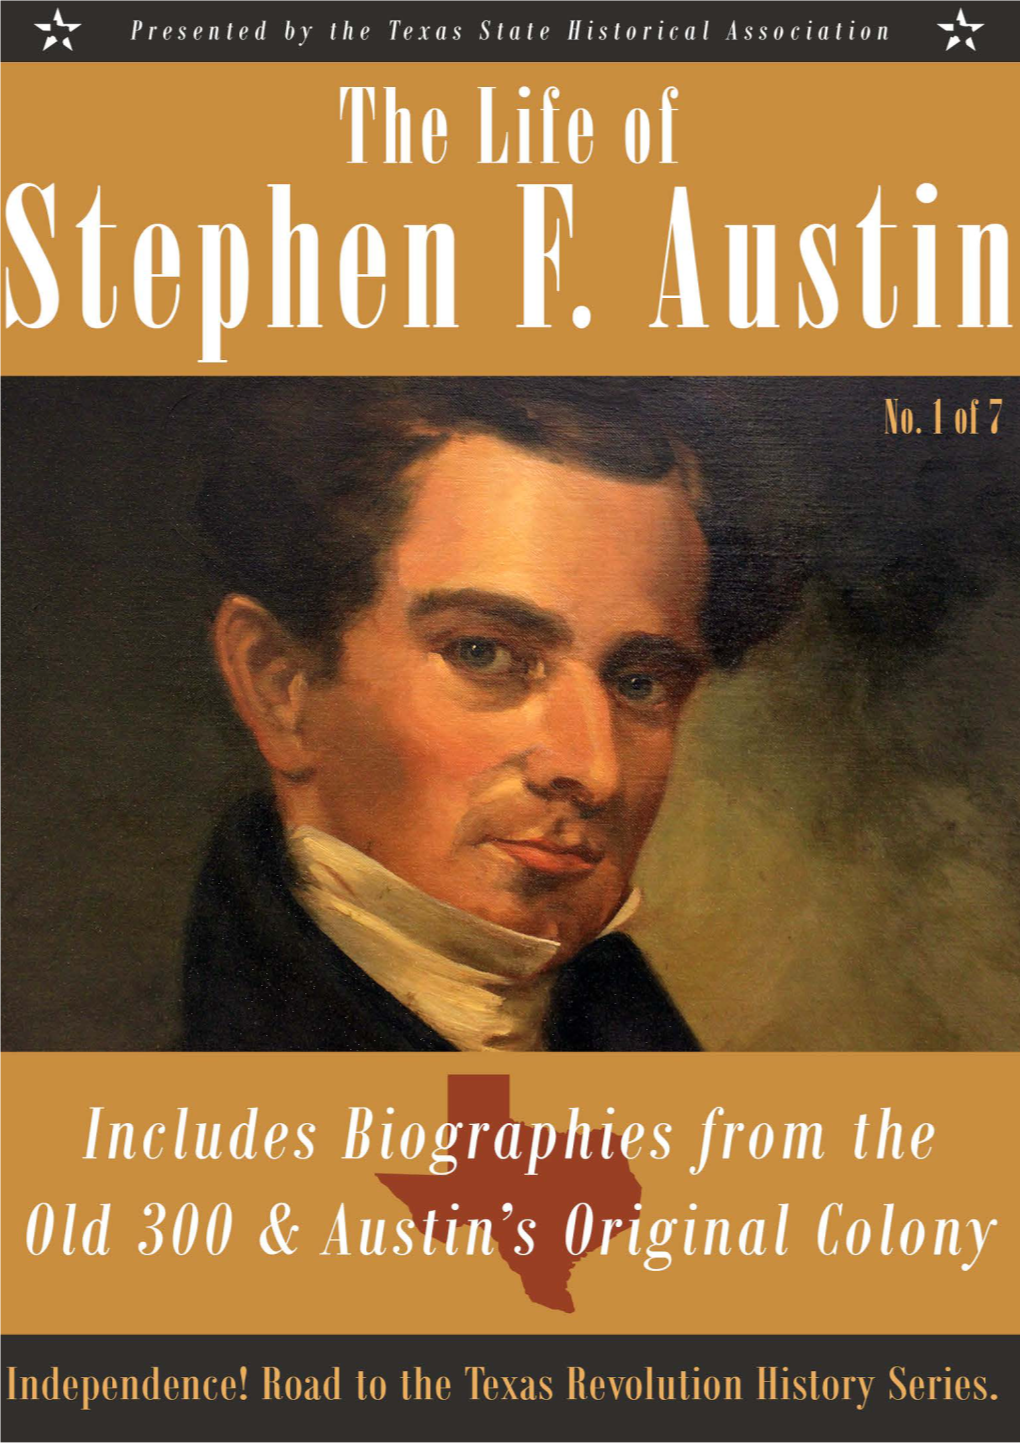 Stephen F. Austin 4